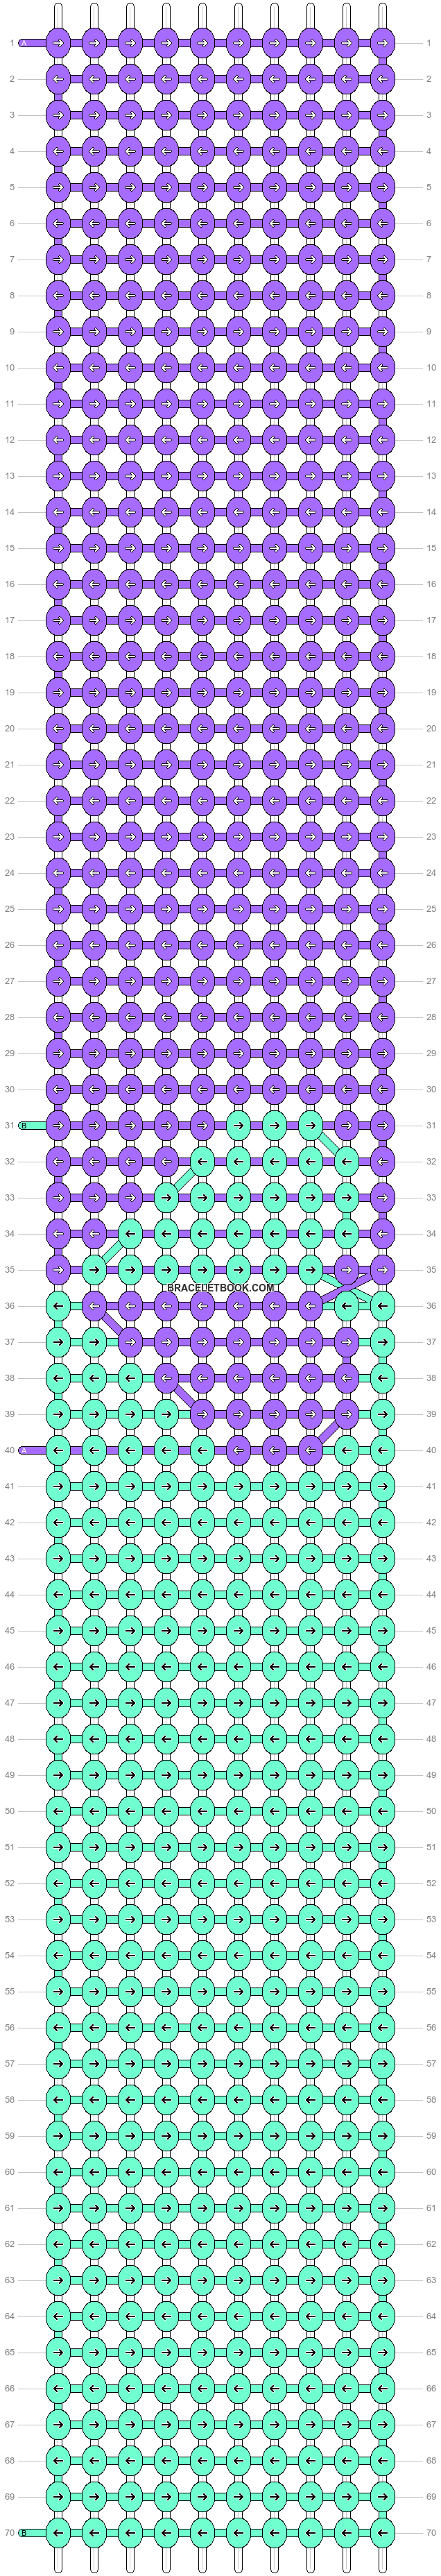 Alpha pattern #29052 variation #41040 pattern